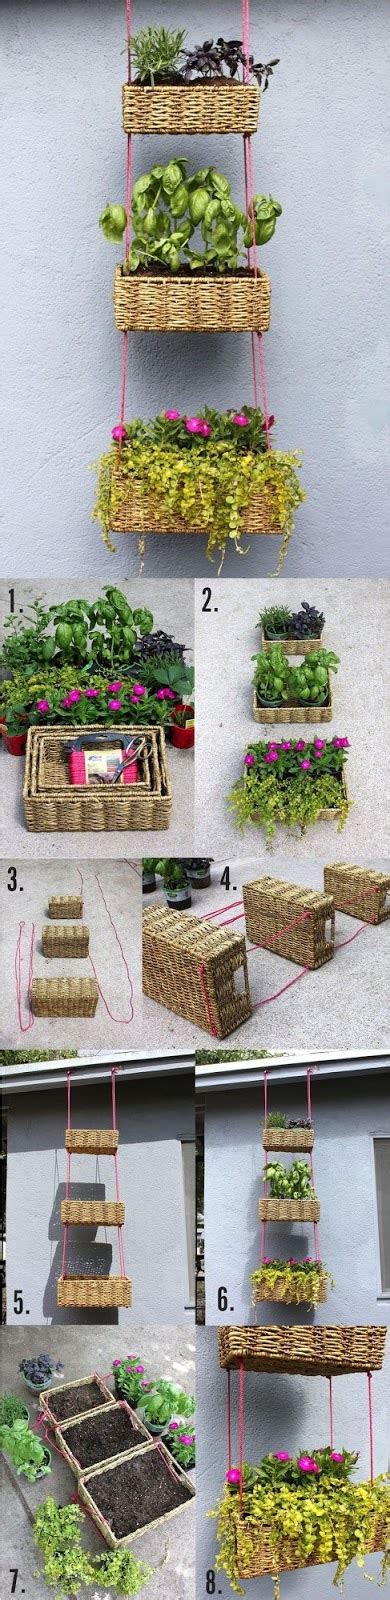 Beautiful Hanging Basket Garden Diy Cestas De Pendurar Cuide Do